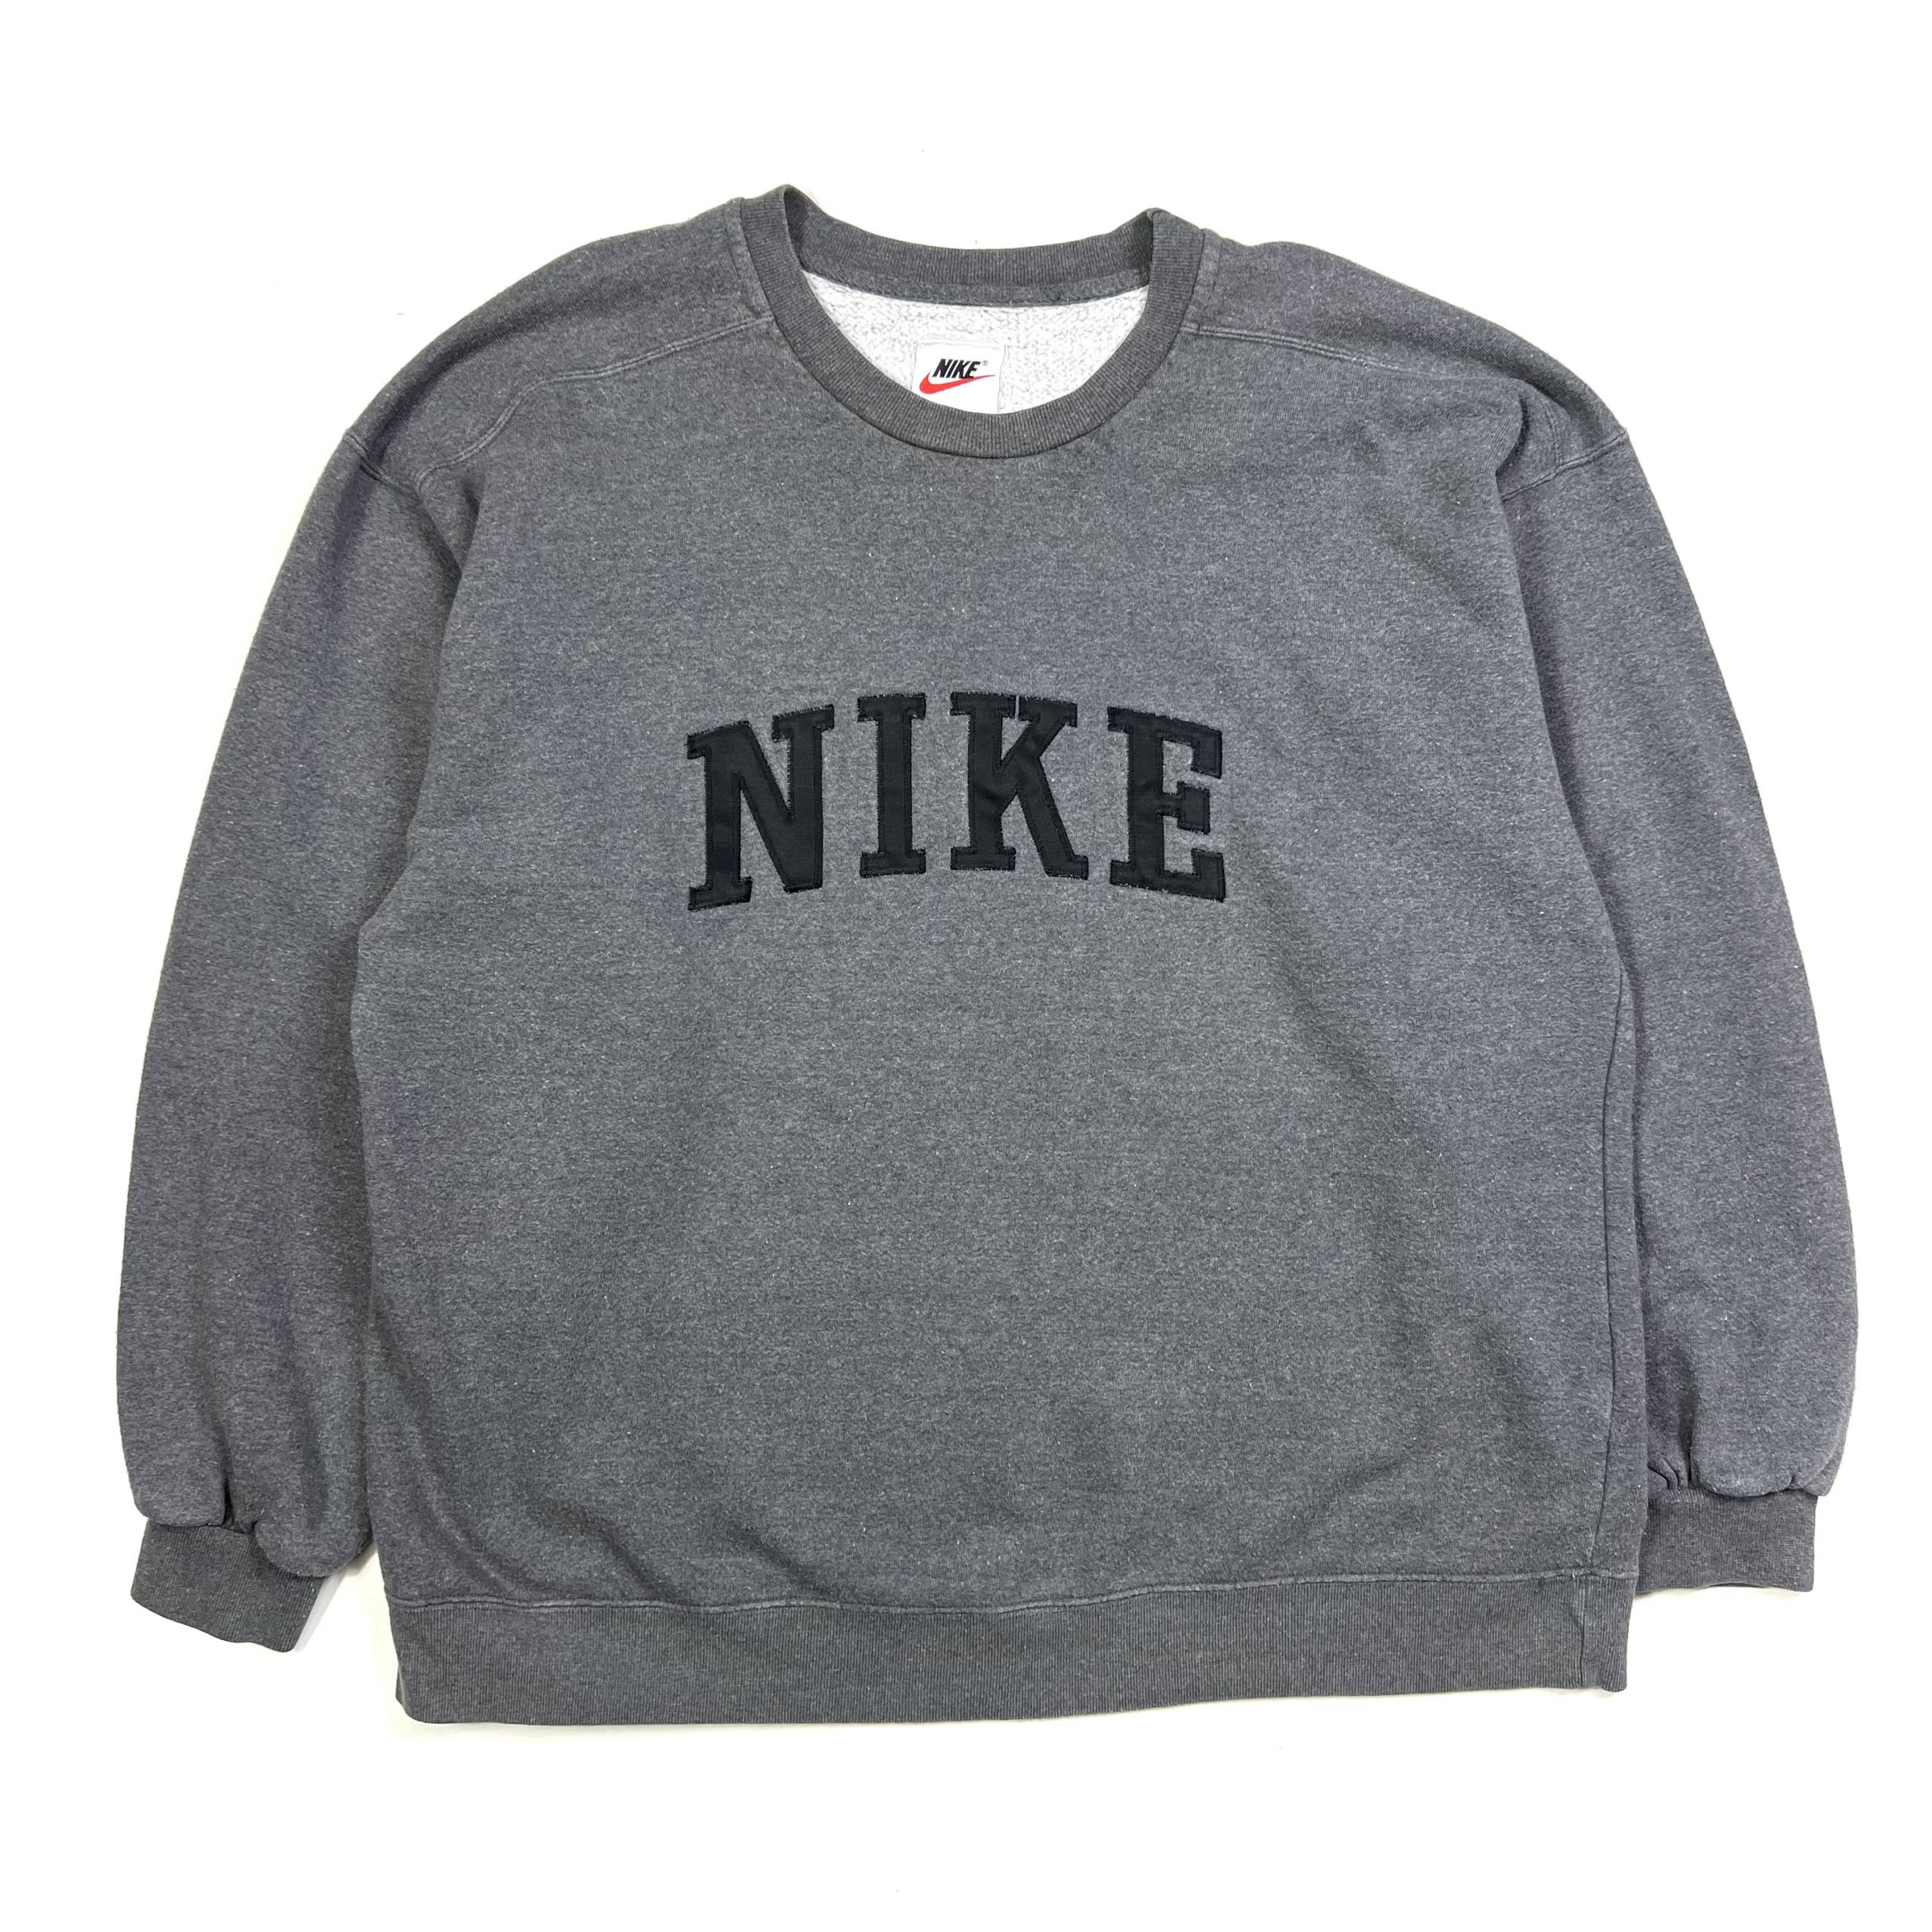 90’s Nike Sweatshirt - X-Large - TMC Vintage - Vintage Clothing